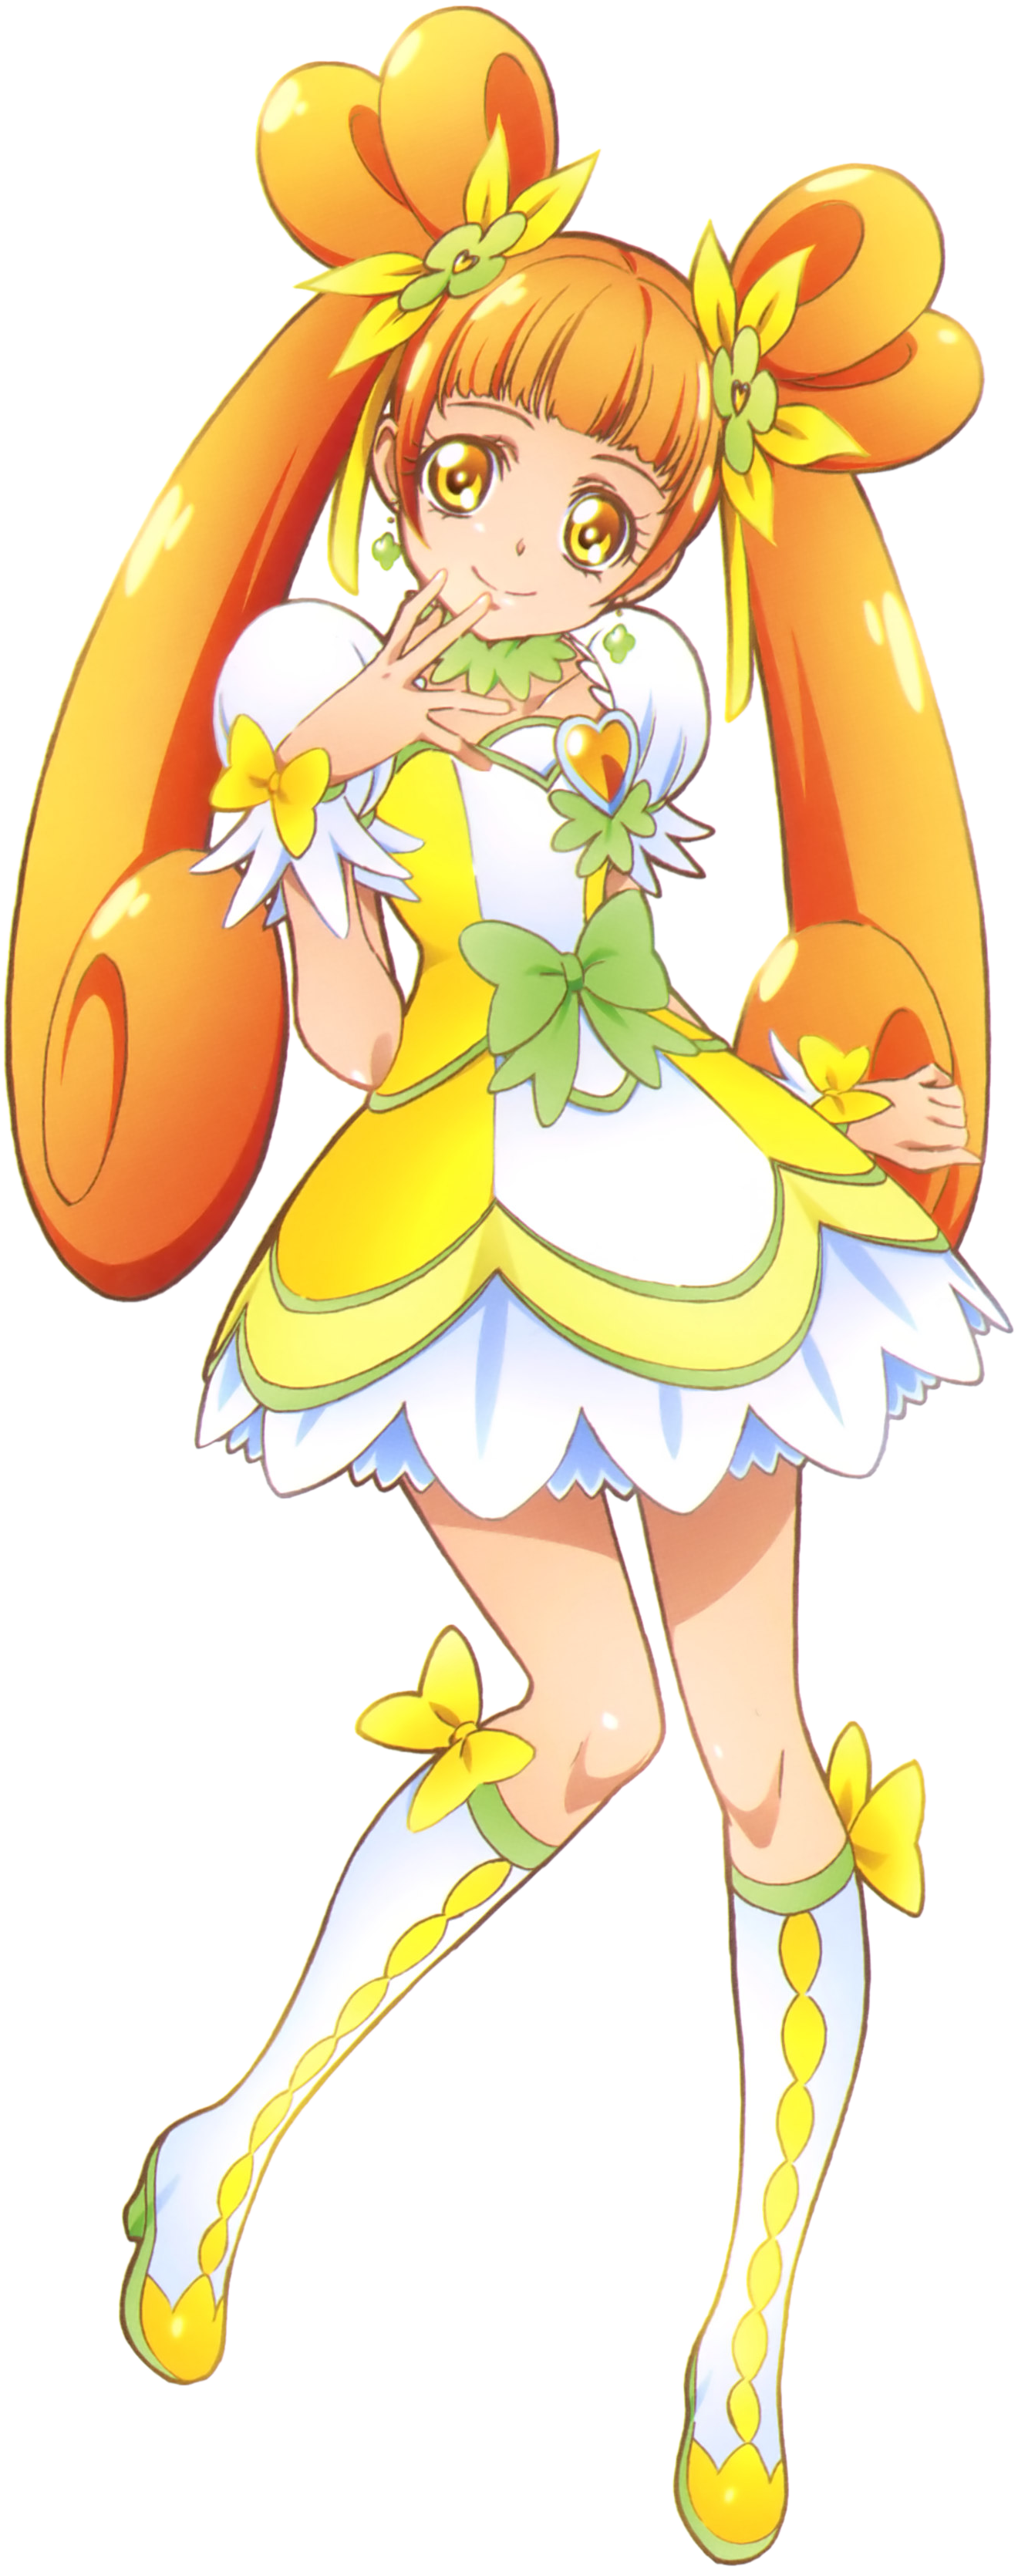 Image Doki Doki Pretty Cure Cure Rosetta Pose4png Magical Girl Mahou Shoujo 魔法少女 Wiki 2977